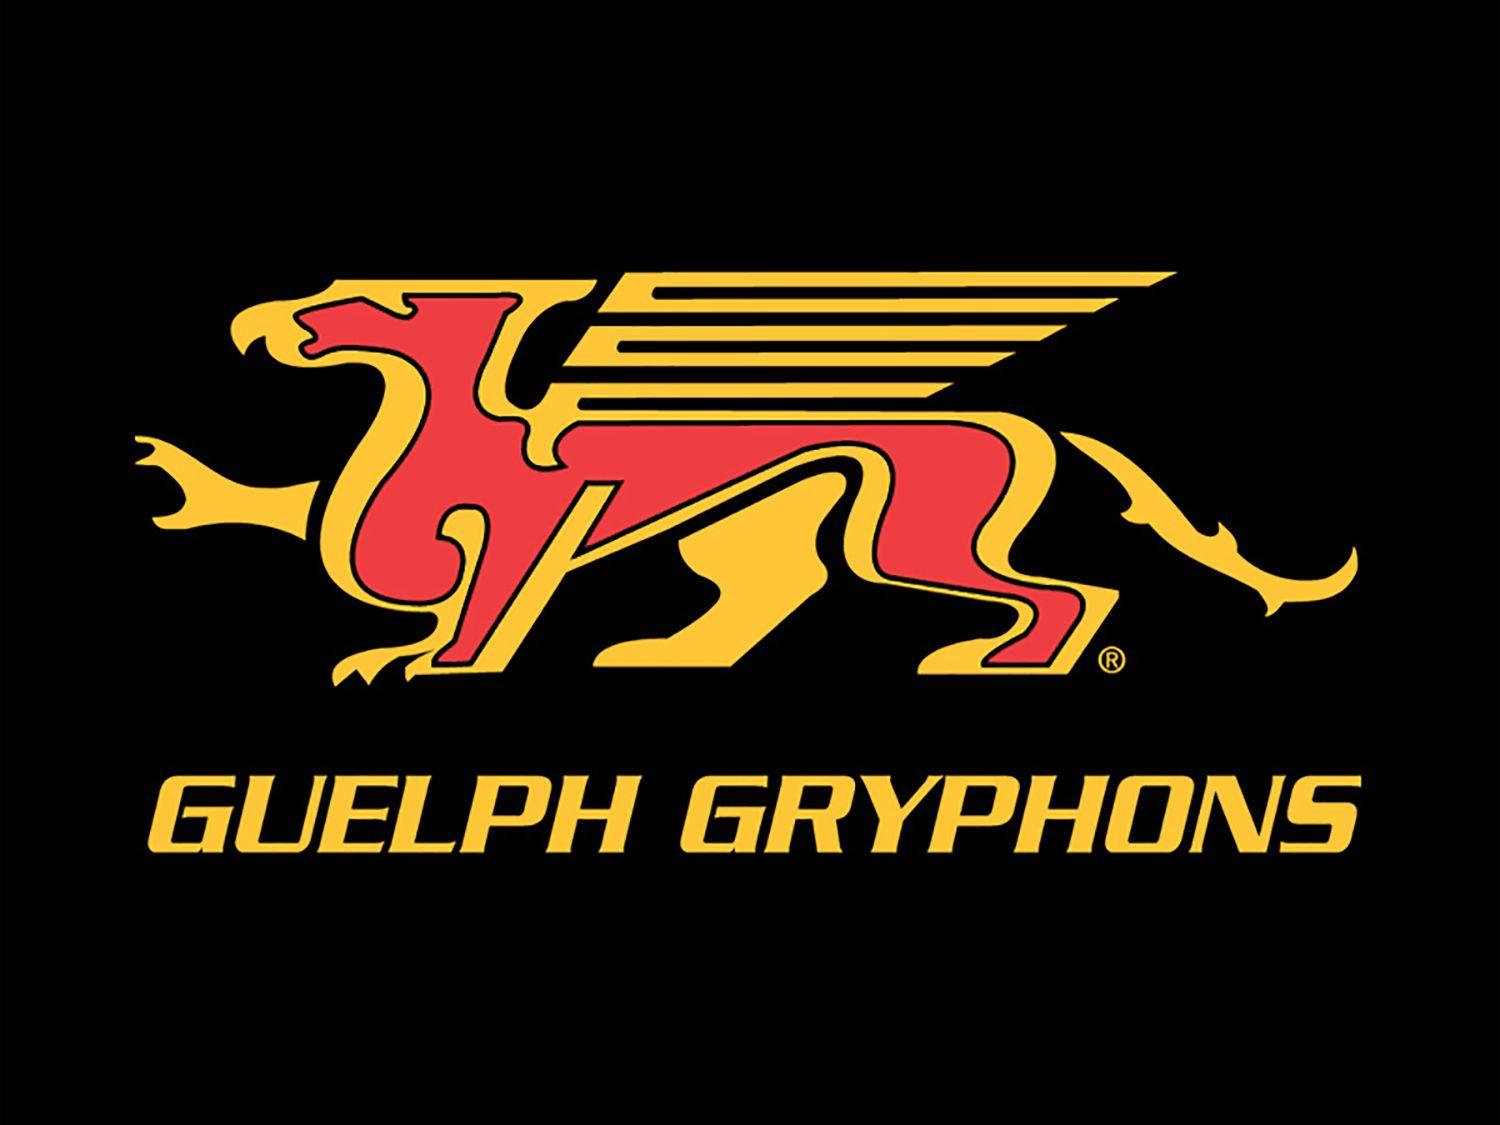 Gryphon Logo - Gryphon women book trip to OUA final - GuelphToday.com